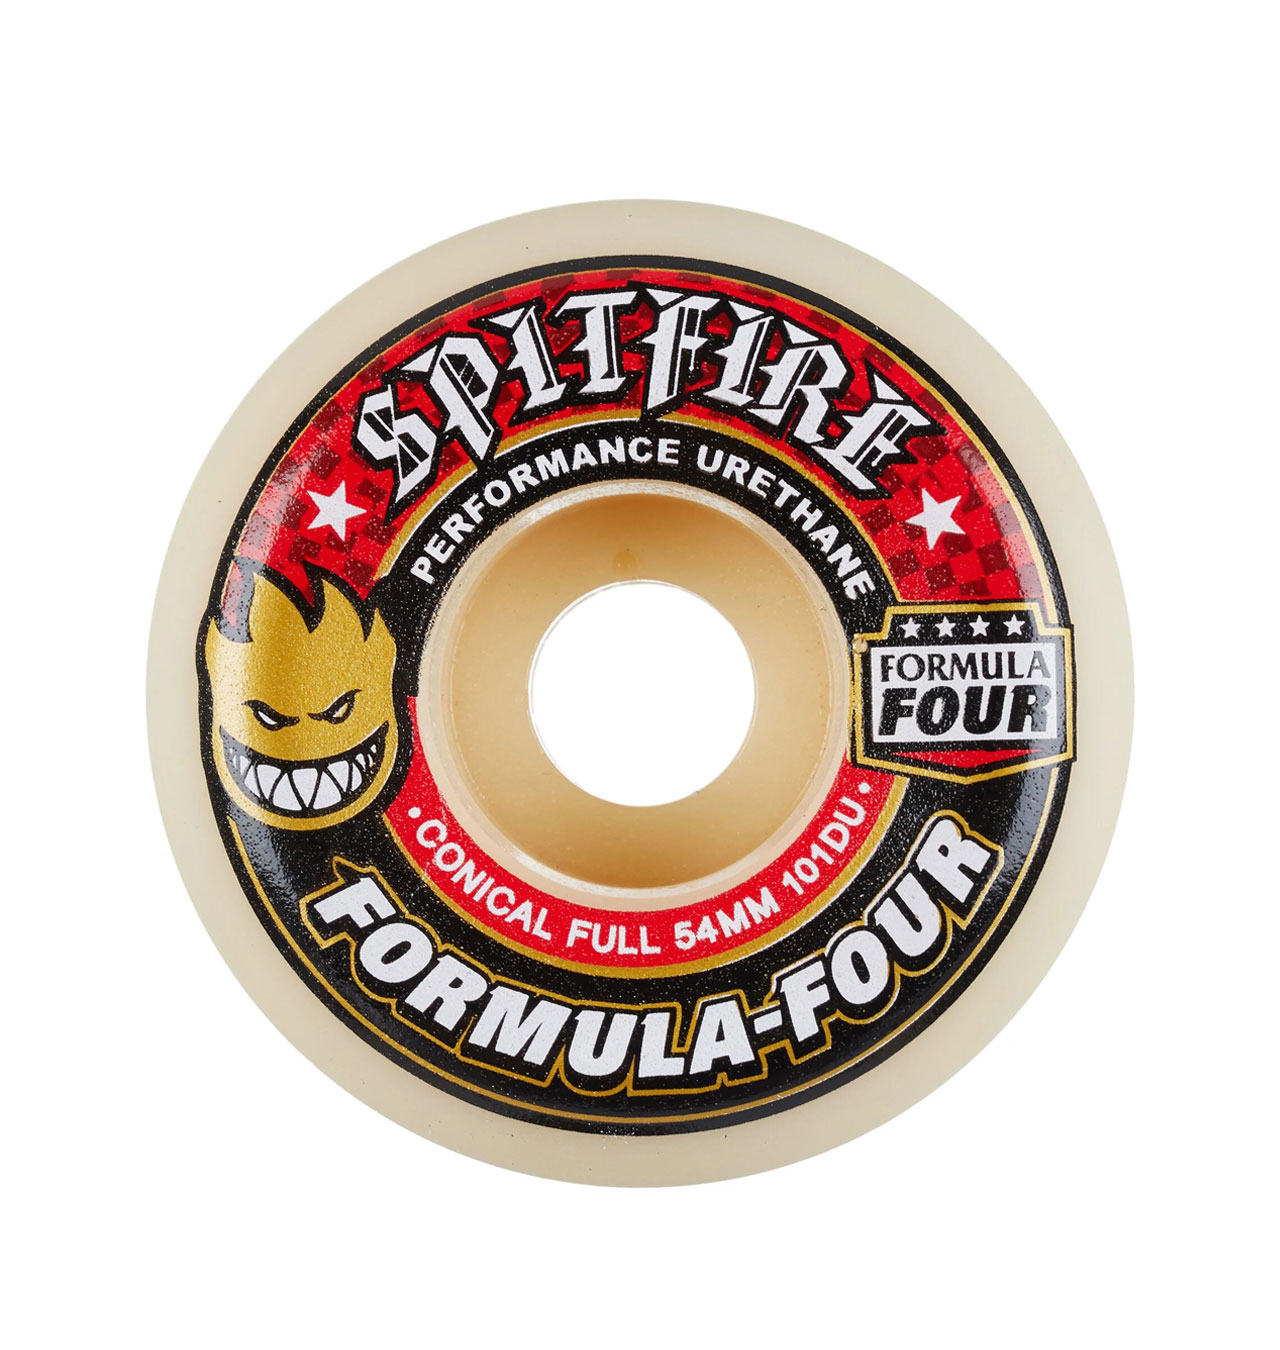 Spitfire---Formula-Four-Conical-Full-101DU-Skateboard-Wheels---52-1233